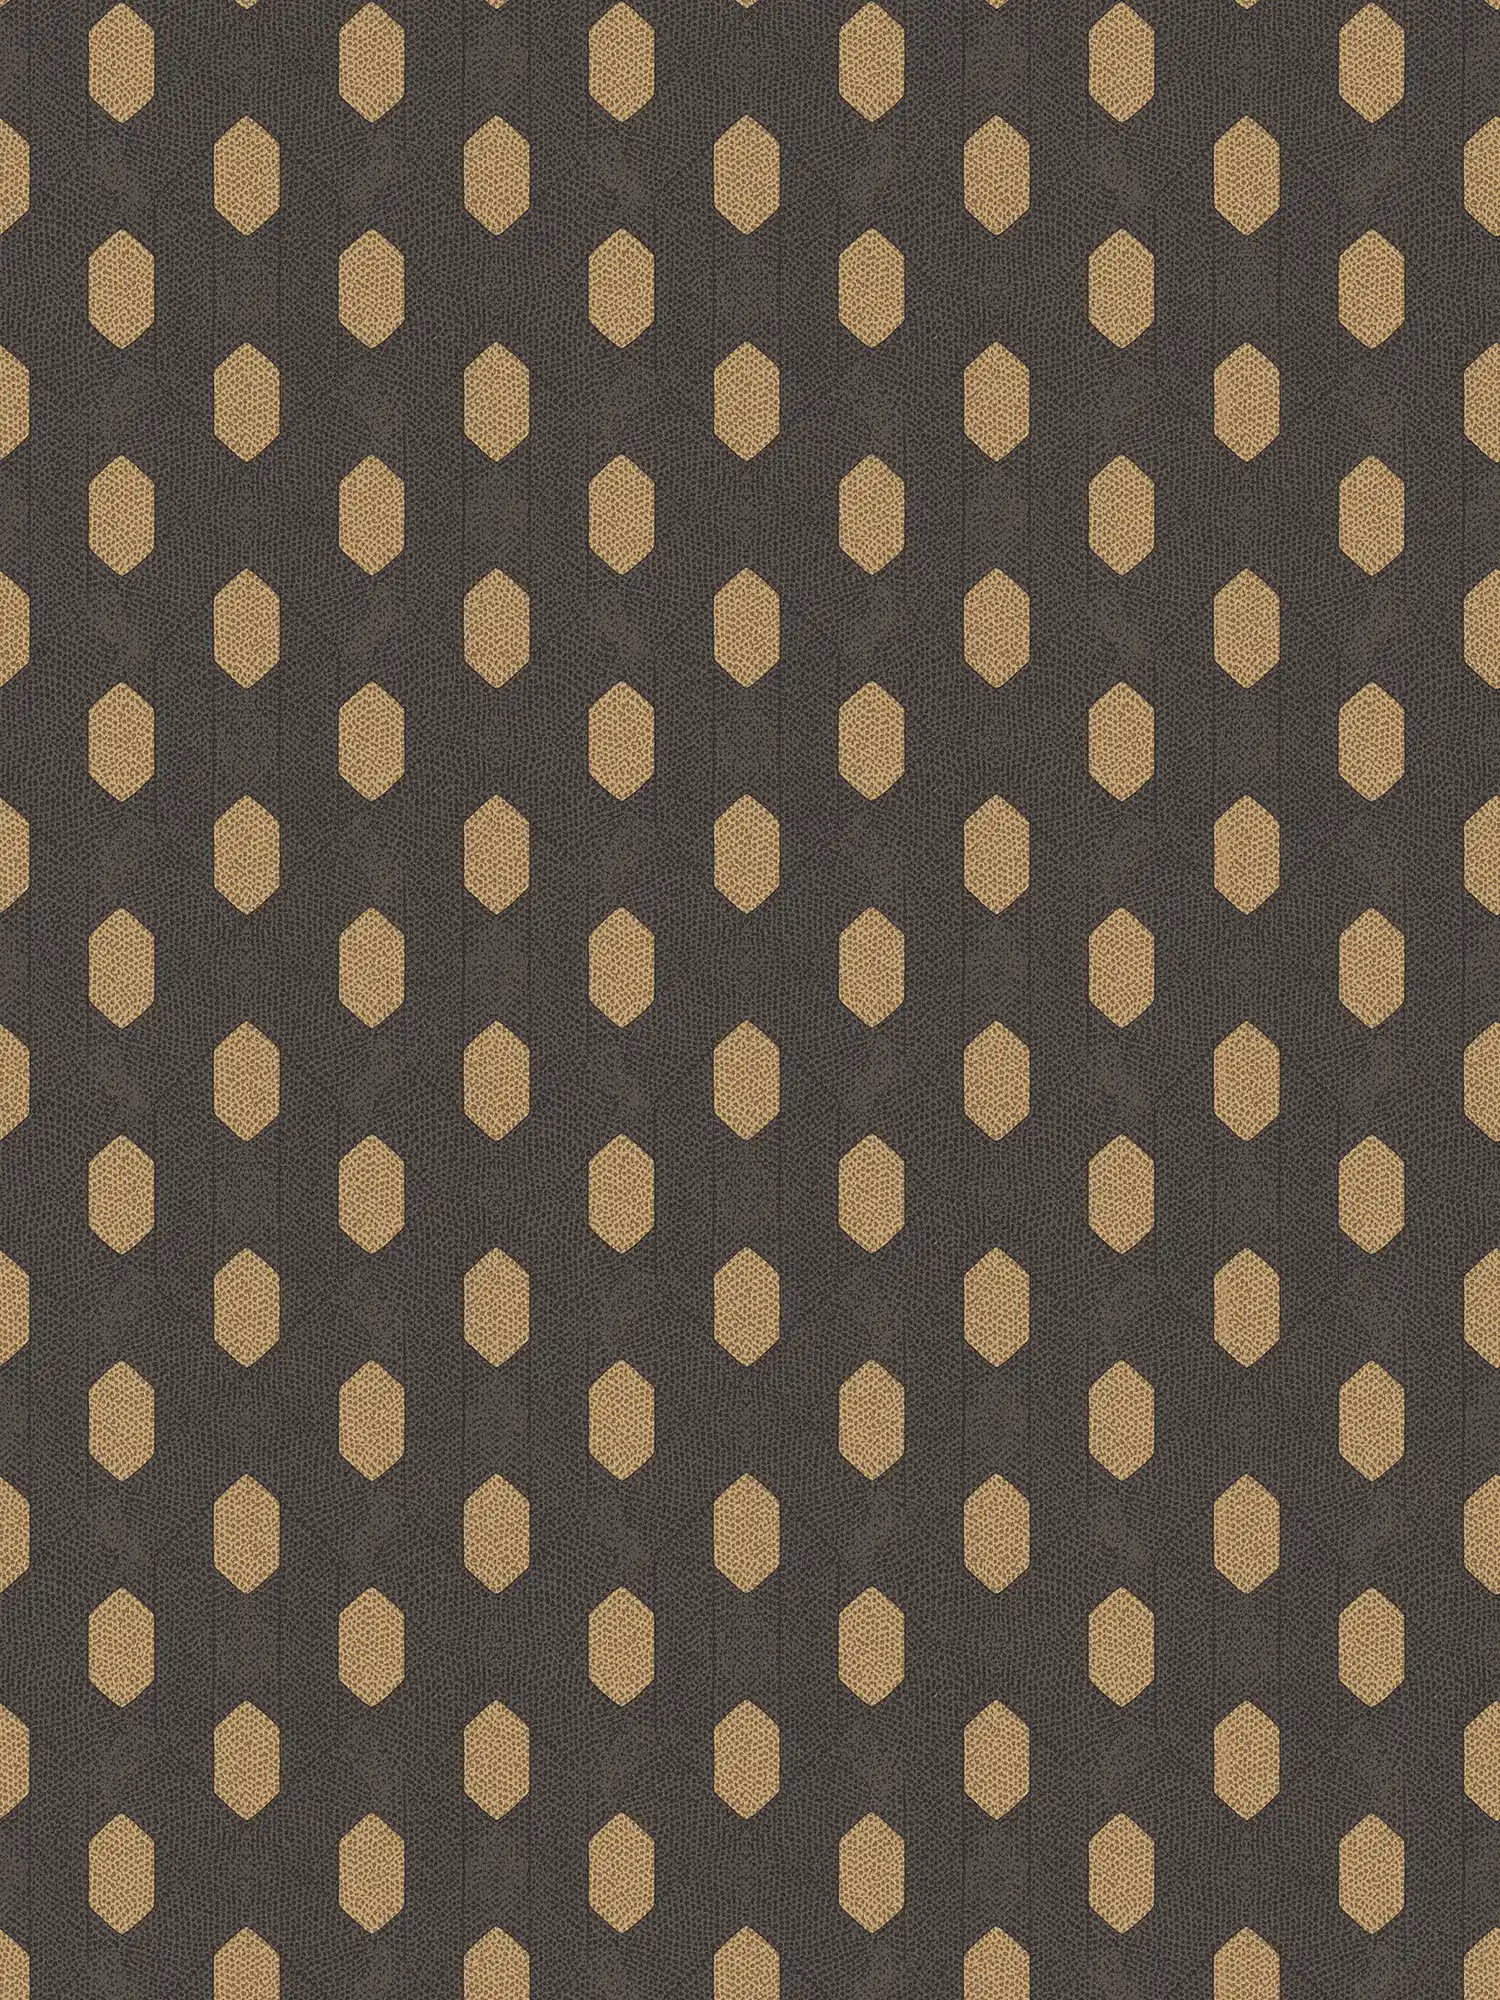 Elegant Uni-Tapete mit goldenem Muster – Schwarz, Gold, Braun
